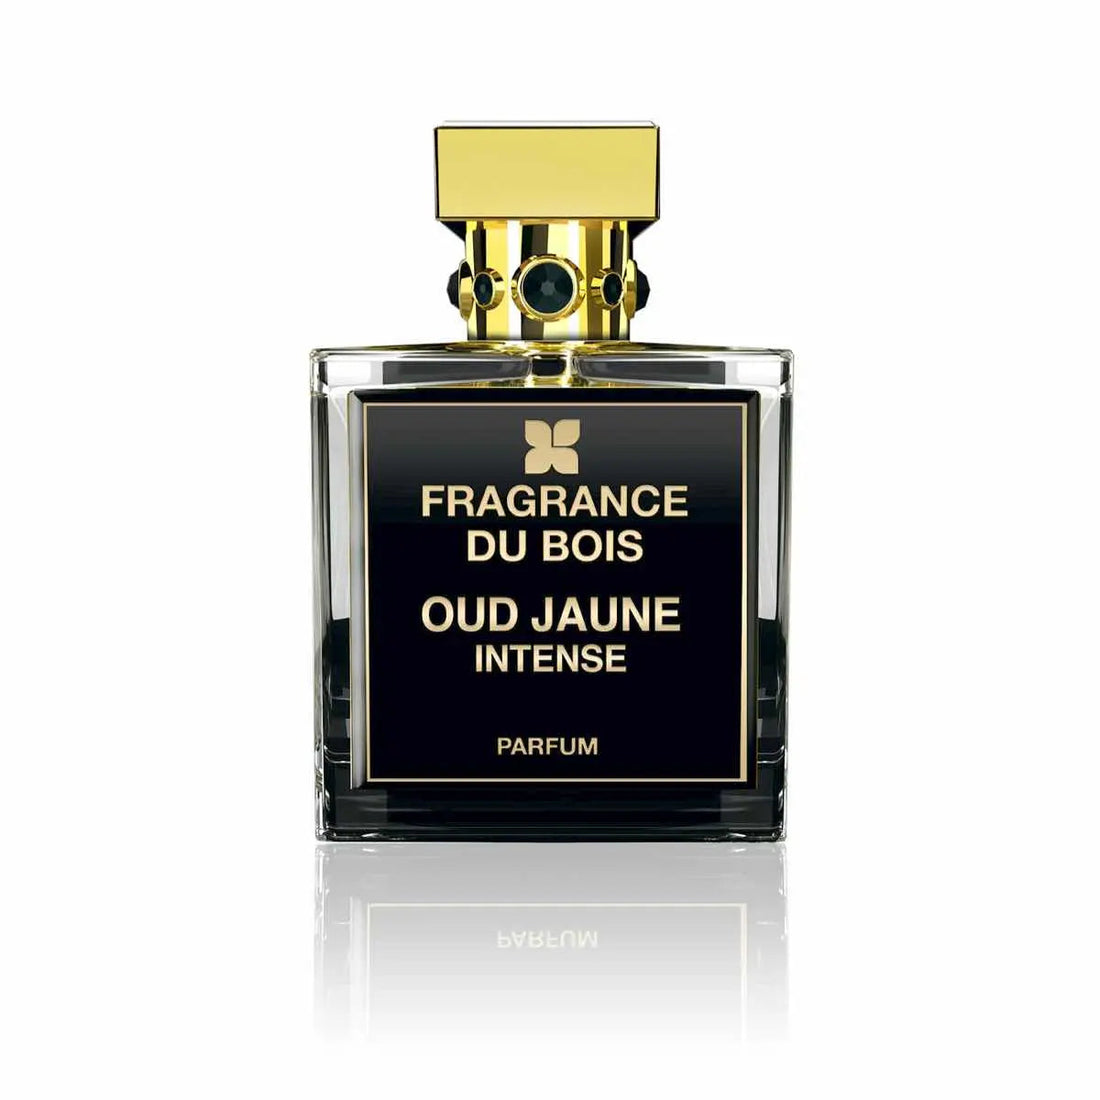 Fragrance du bois Oud Jaune Perfume intenso - 50 ml